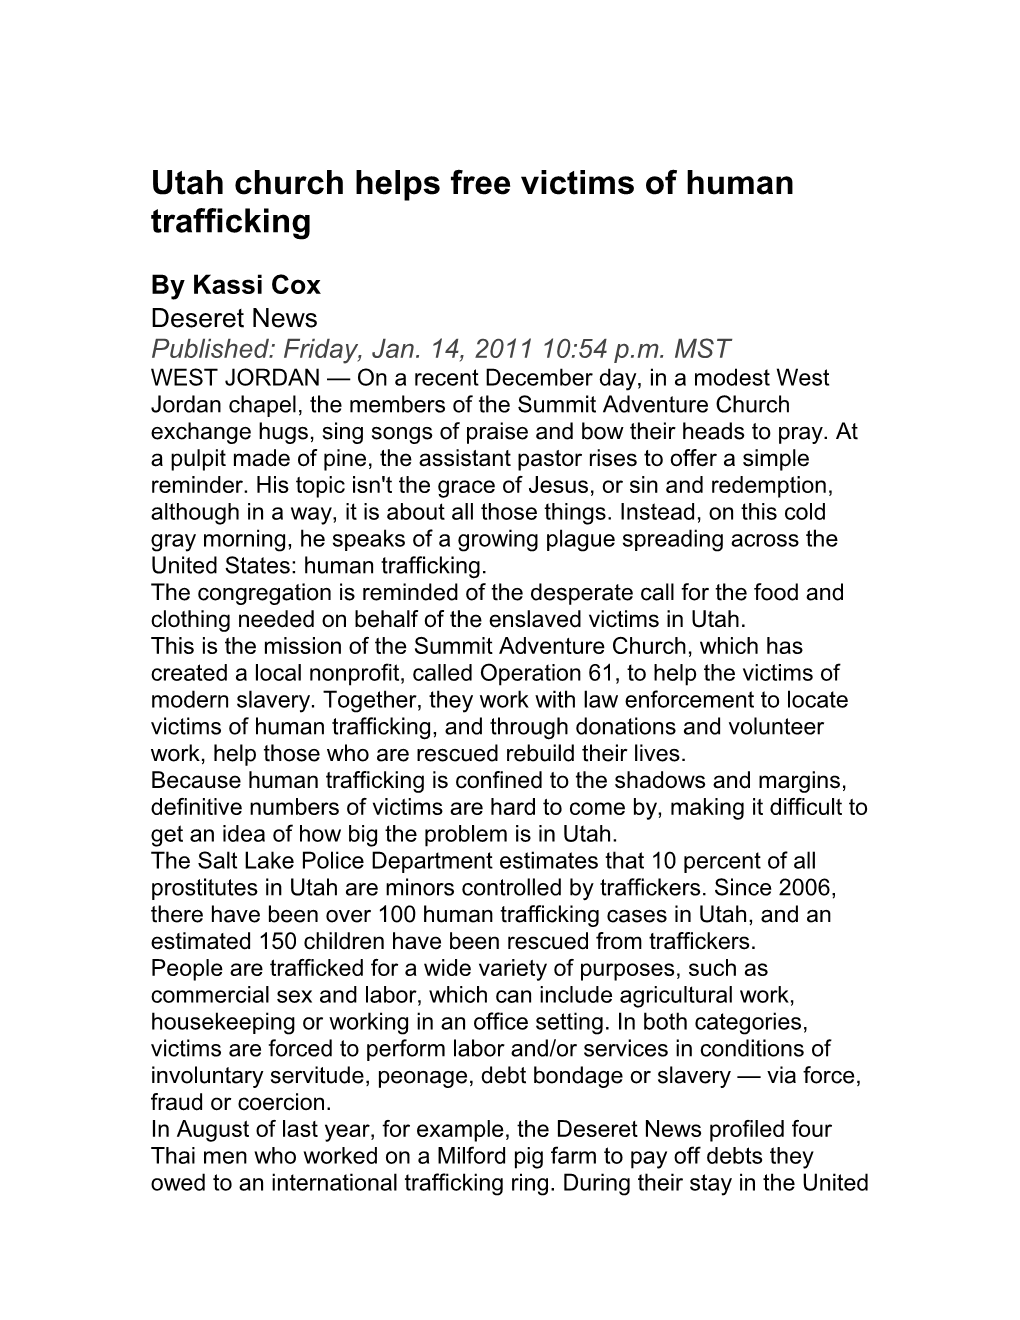 Utah Church Helps Free Victims of Human Trafficking